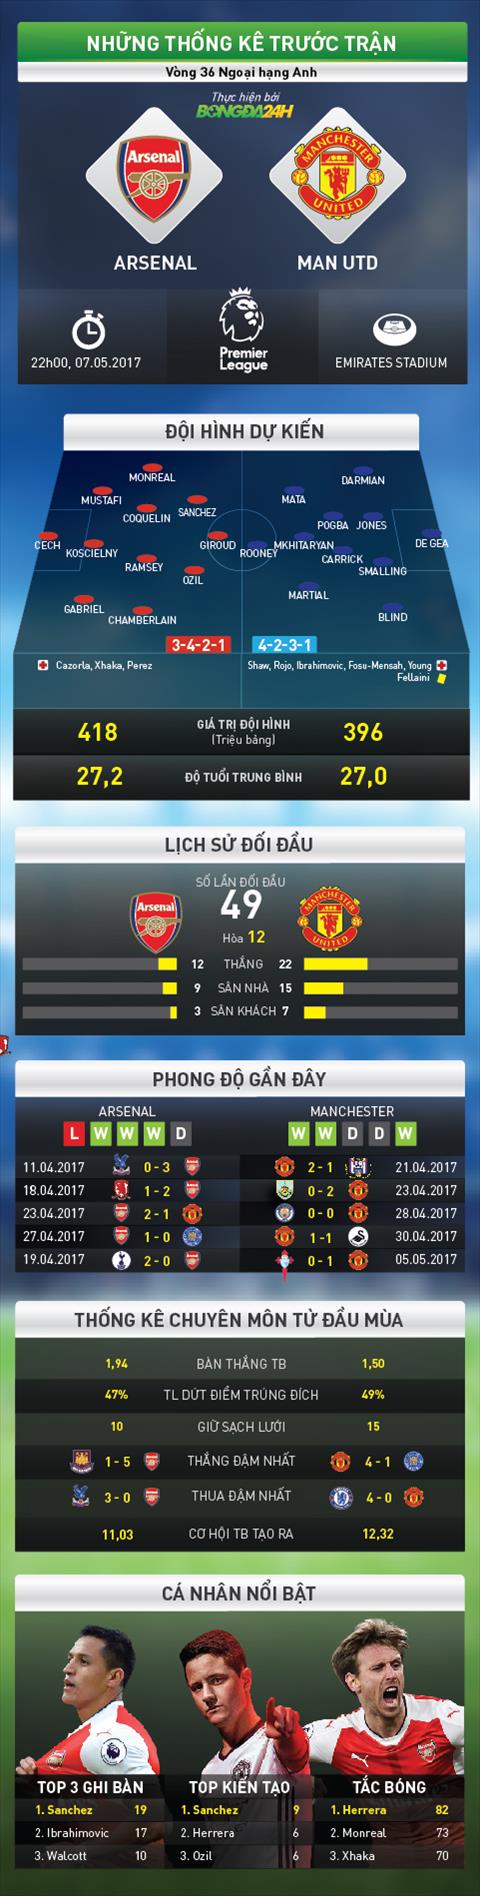 Infographic Nhung thong tin dang chu y truoc tran dau Arsenal vs MU hinh anh